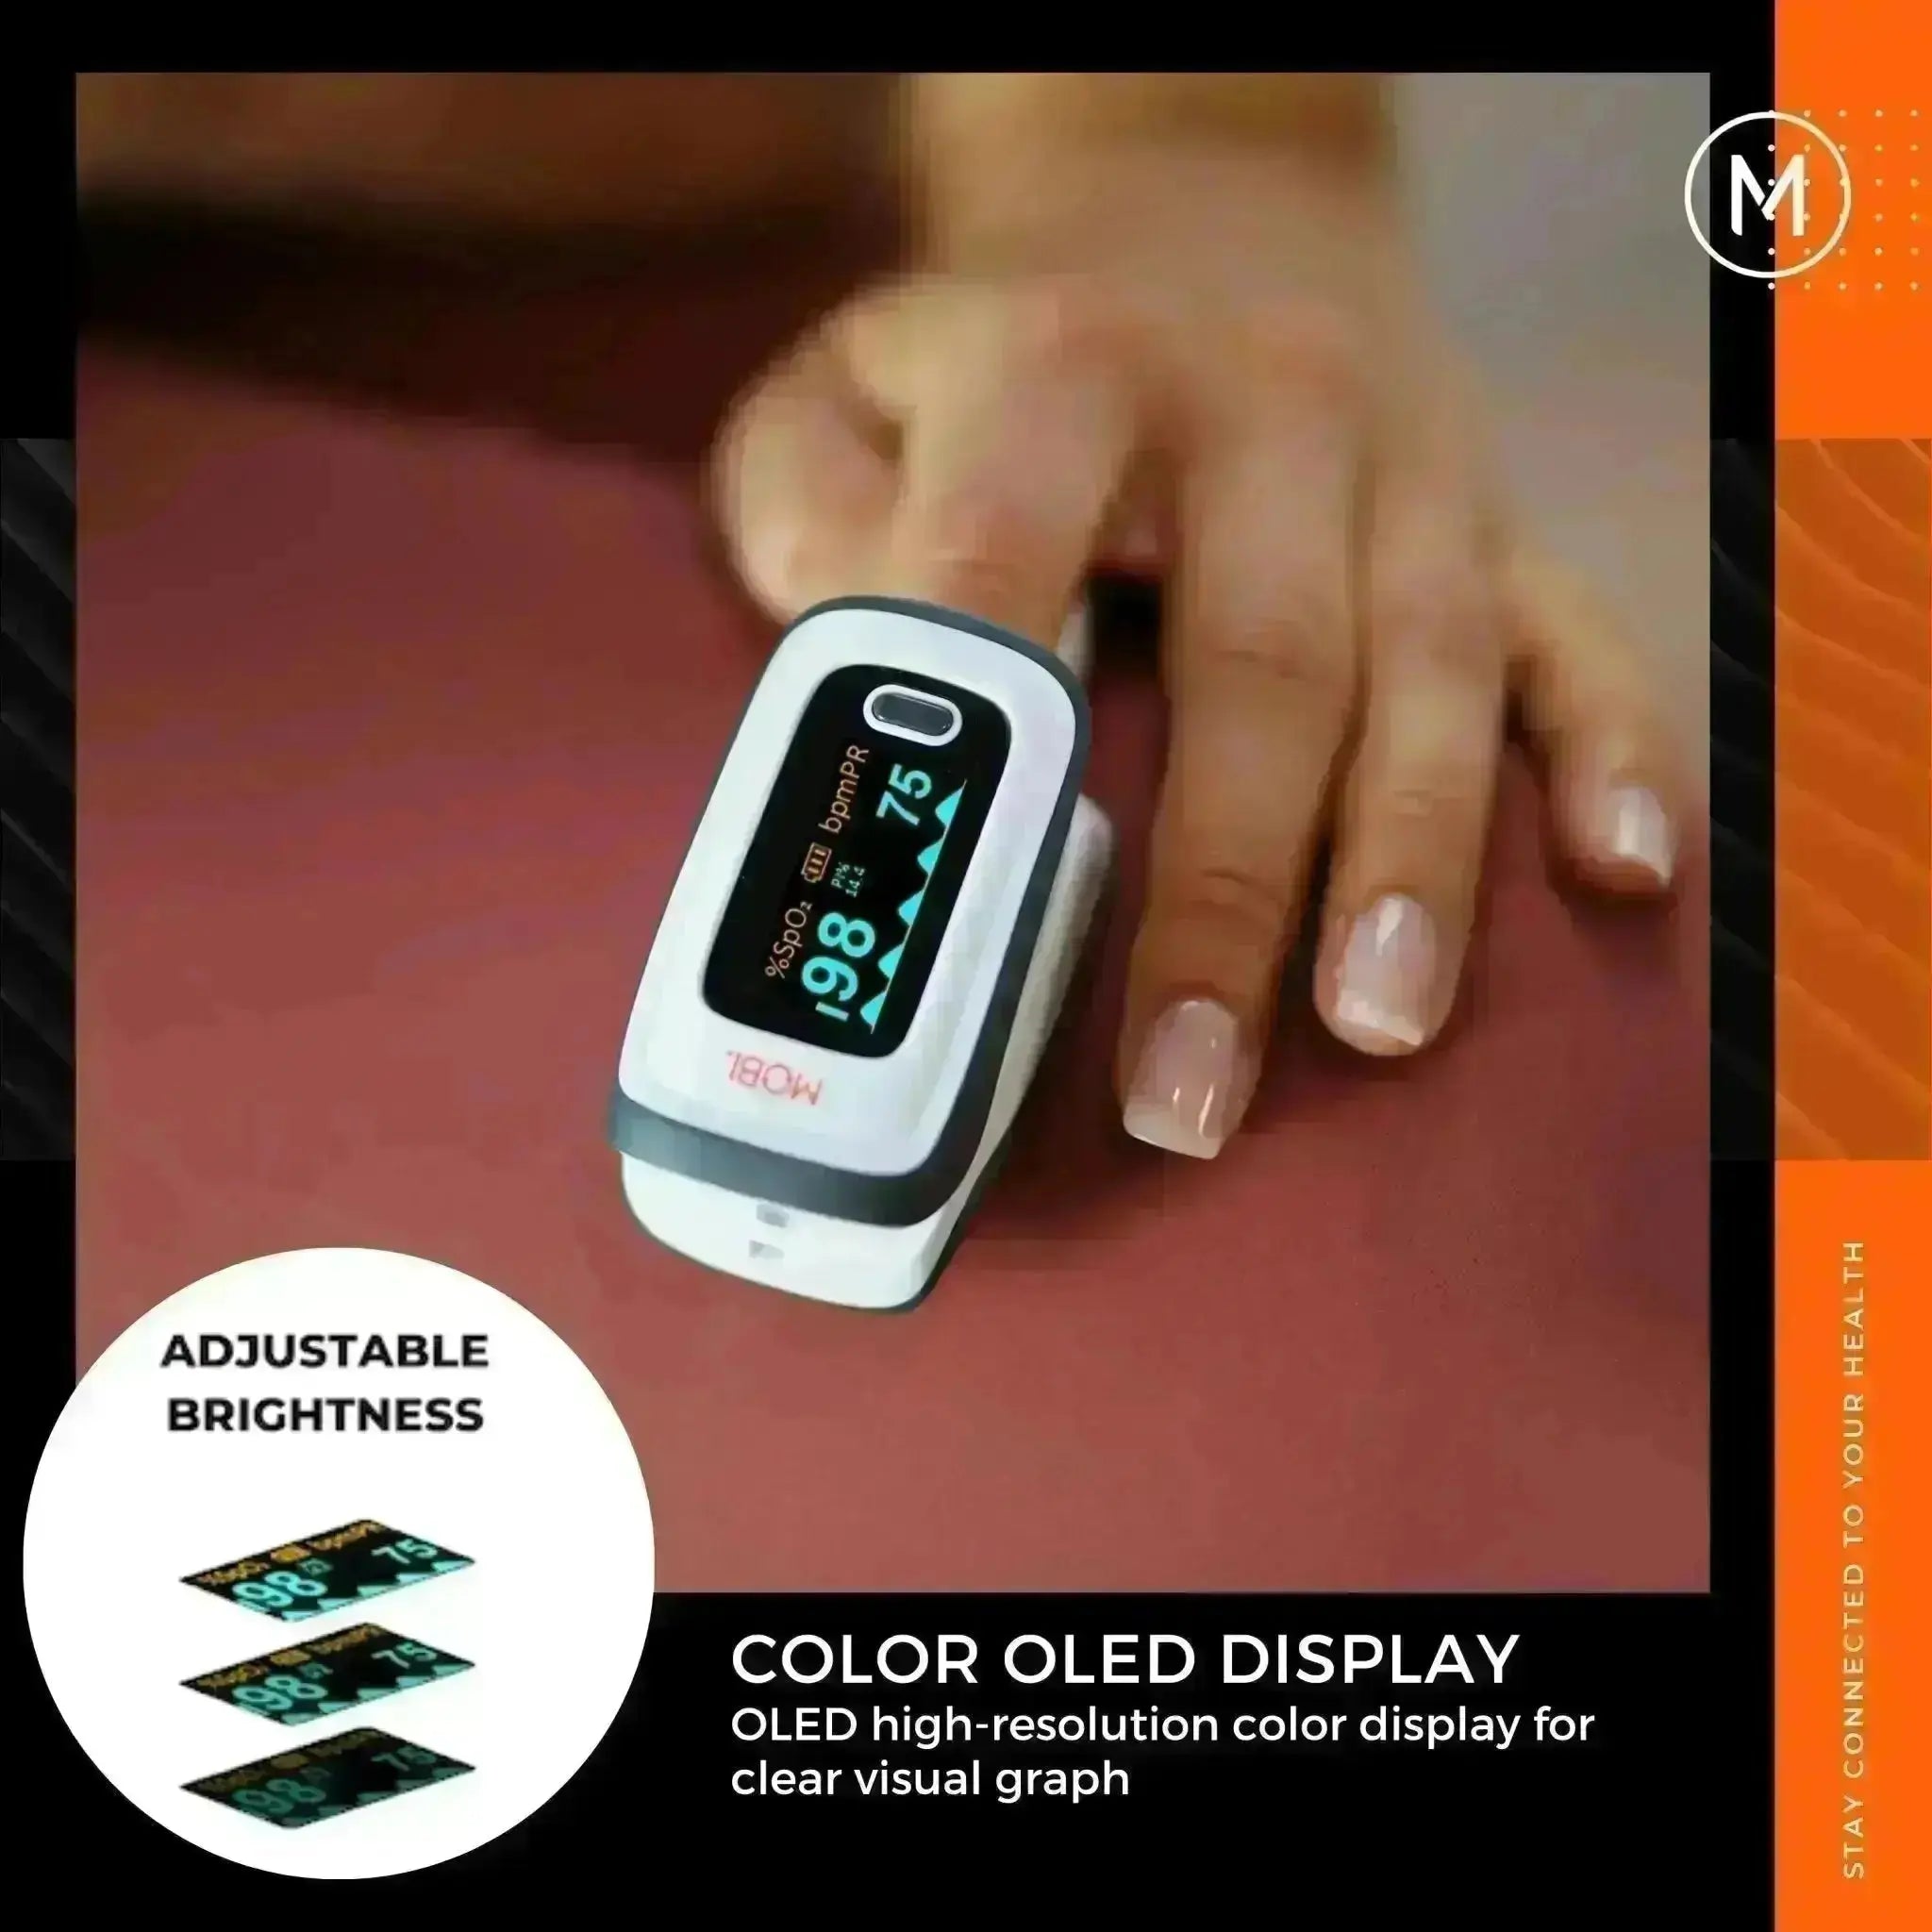 Smart Fingertip Bluetooth Pulse Oximeter - MOBI USA